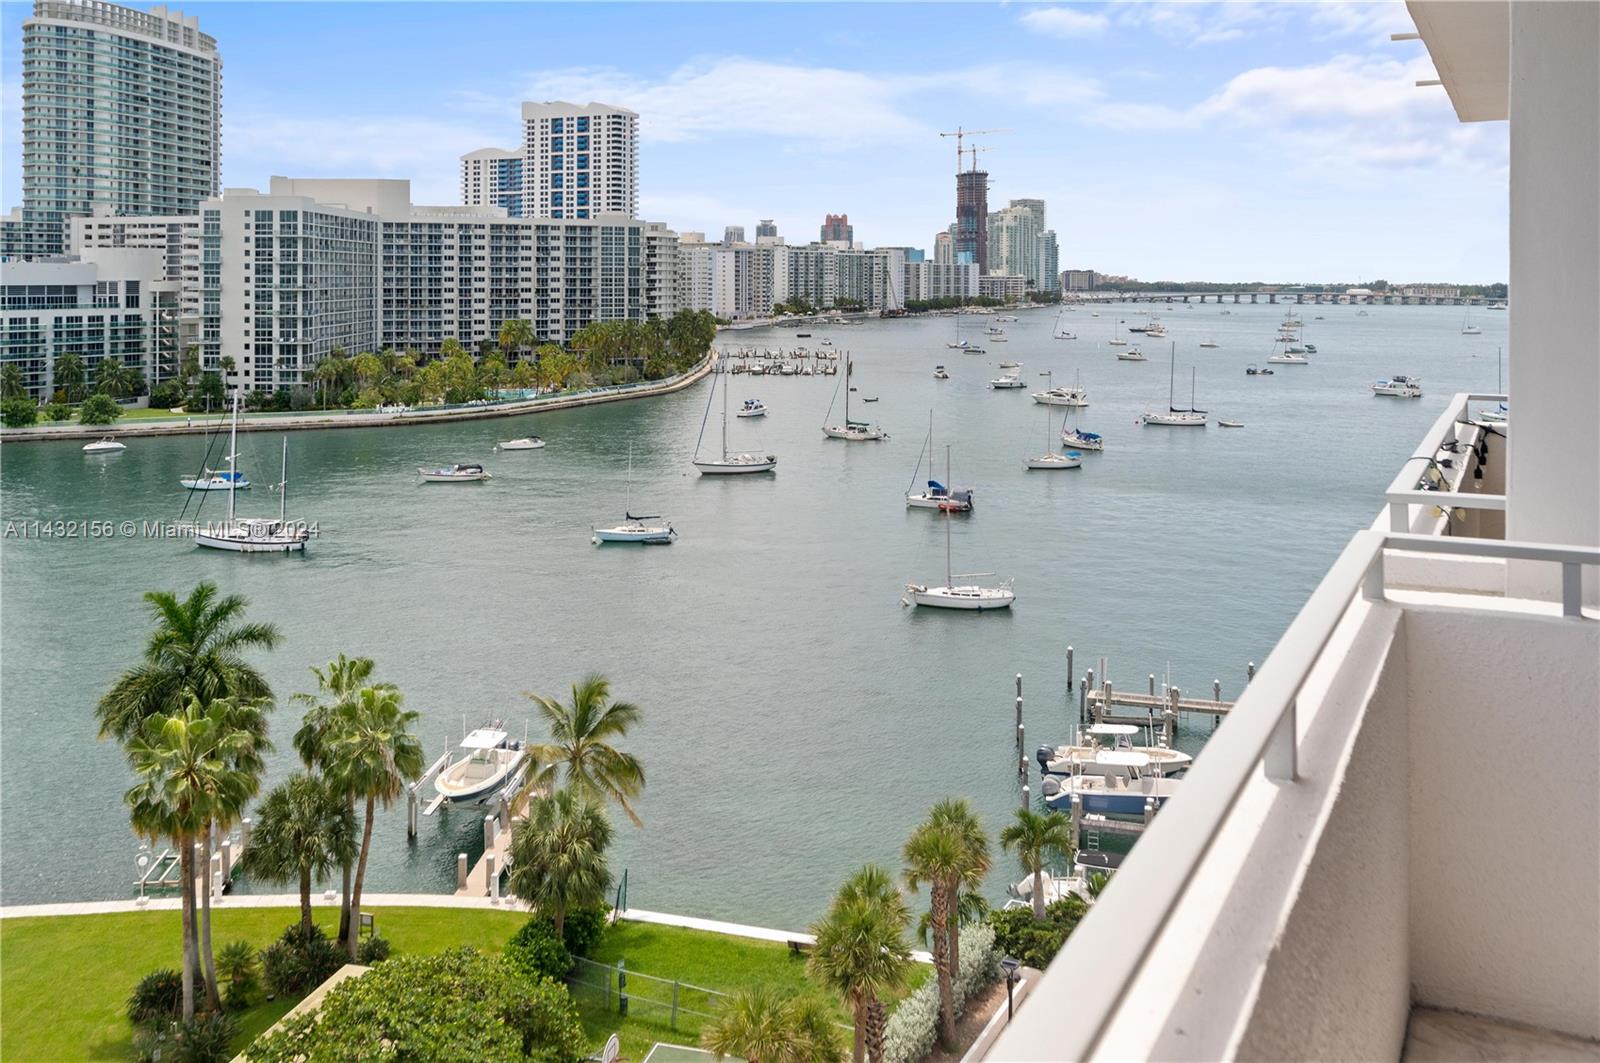 Property for Sale at 11 Island Ave 1006, Miami Beach, Miami-Dade County, Florida - Bedrooms: 2 
Bathrooms: 2  - $870,000